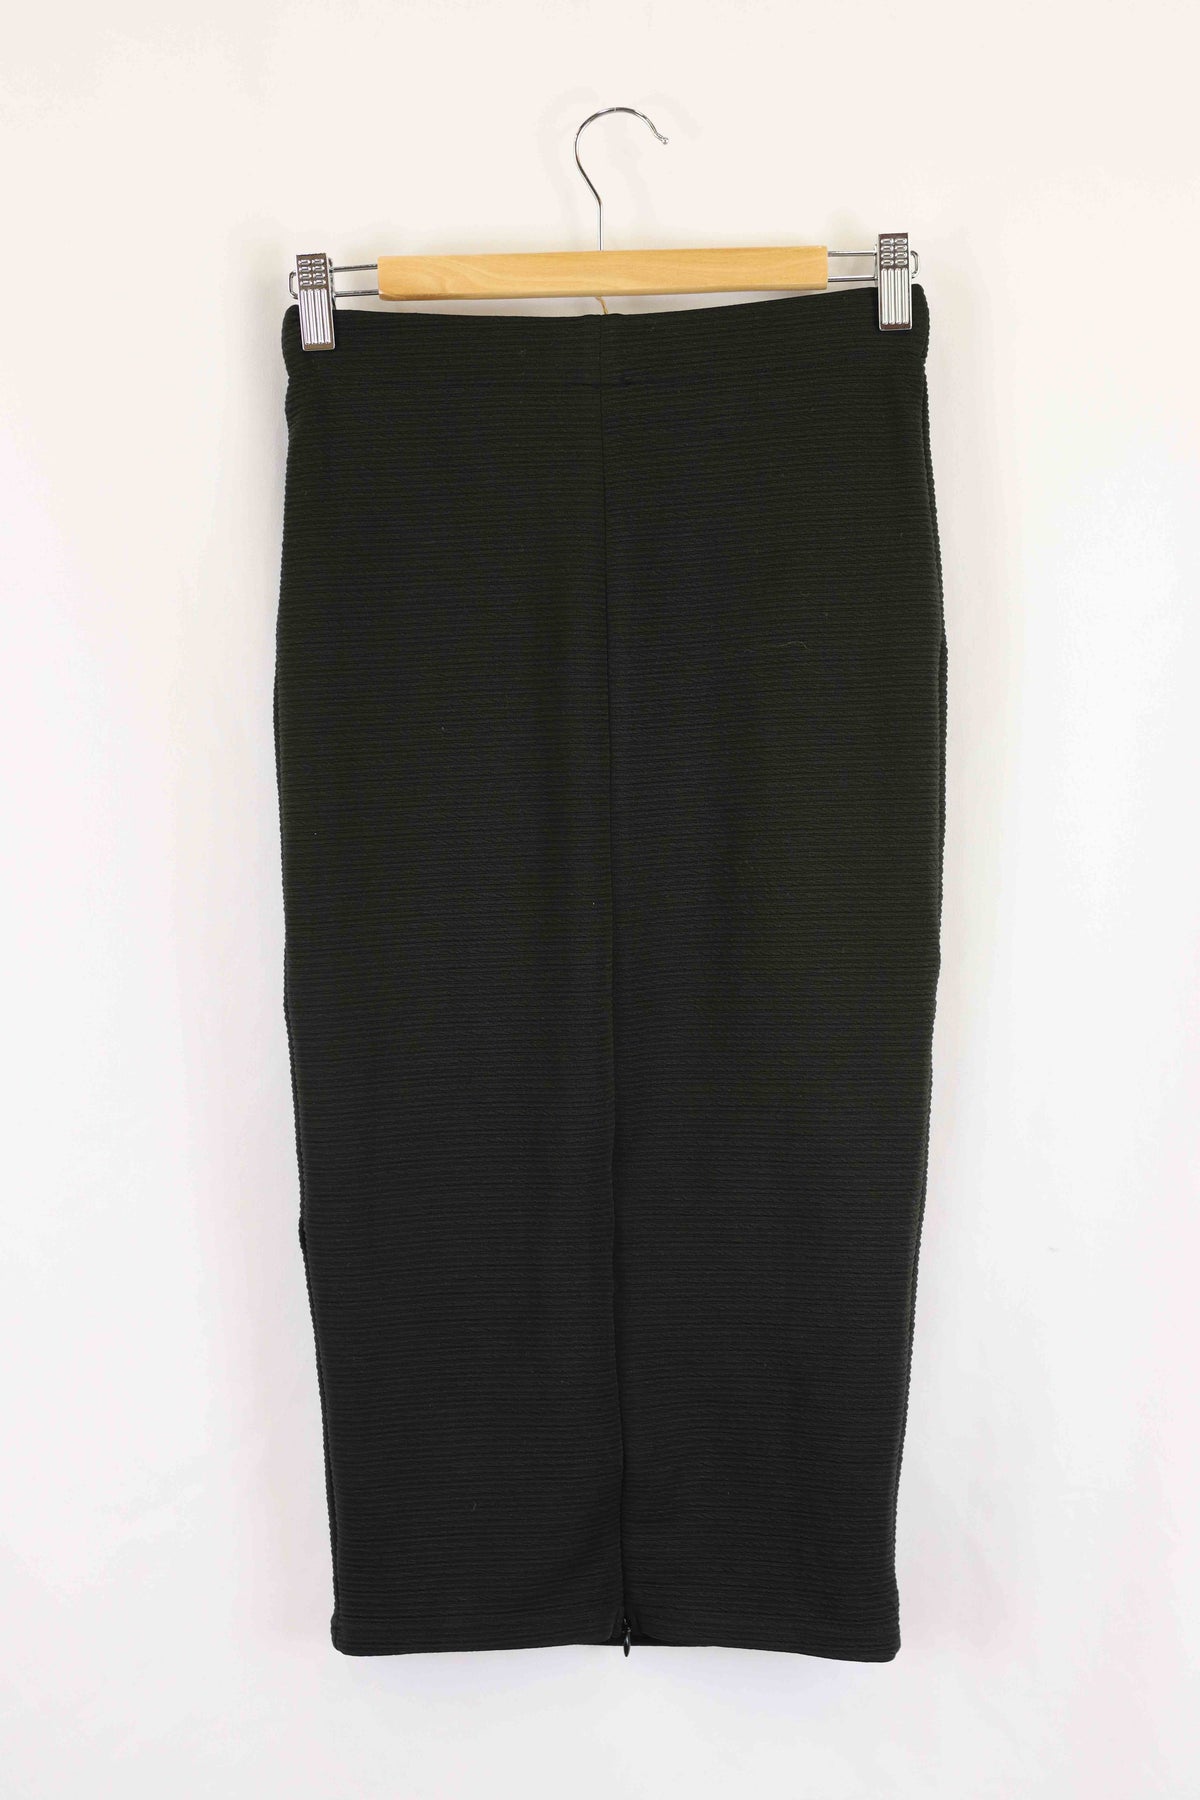 Forcast Black Pencil Skirt 8